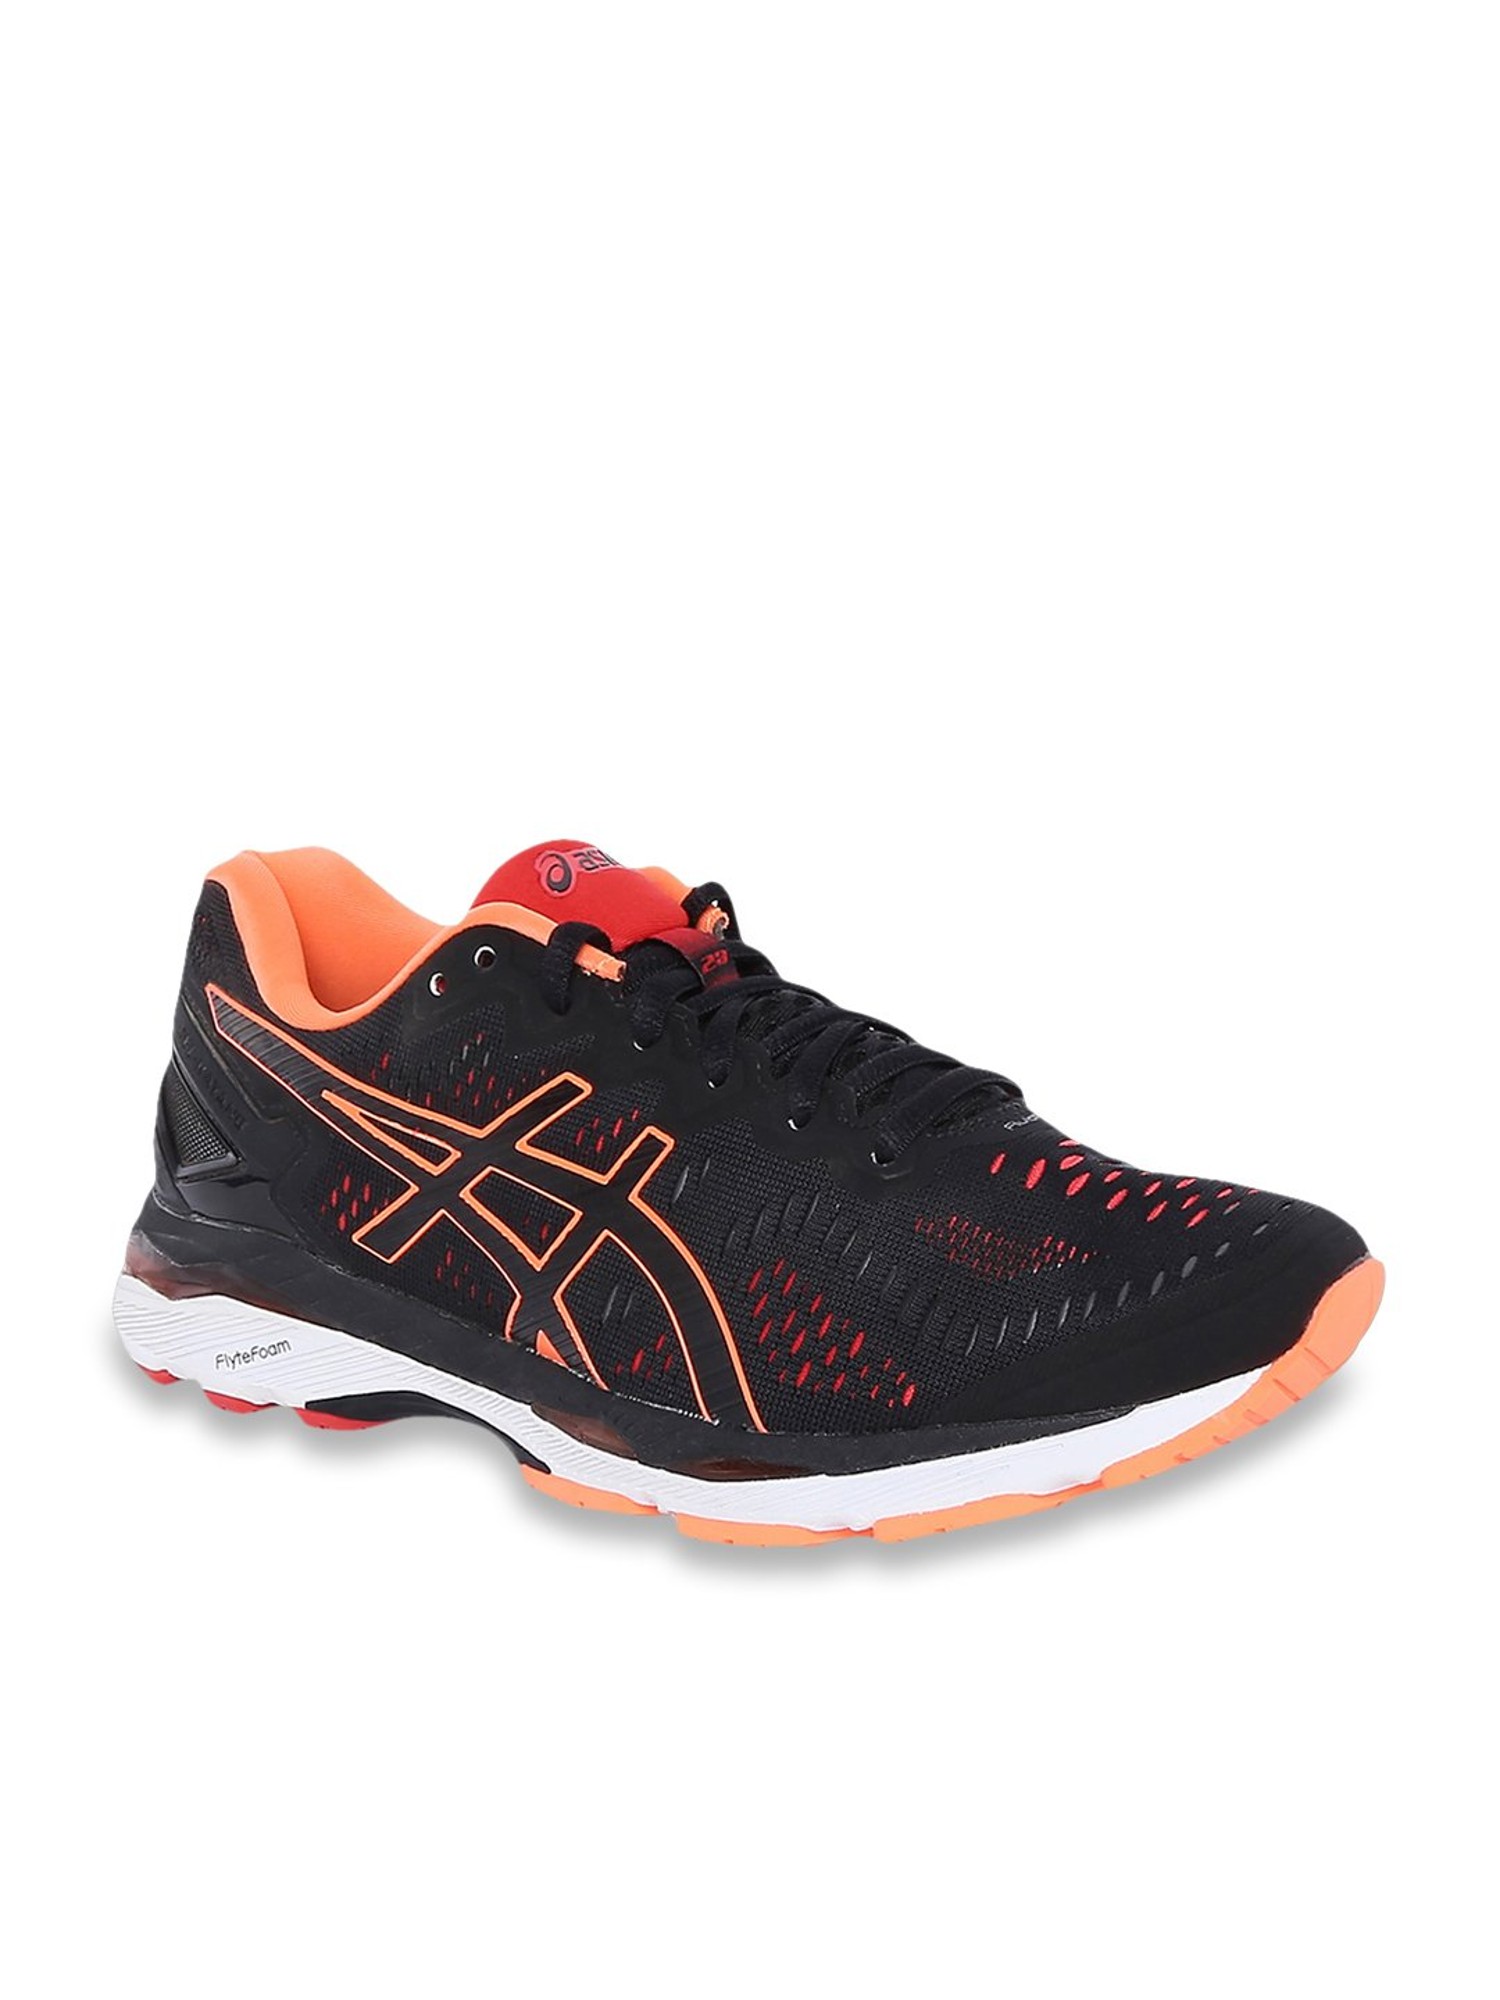 Buy Asics Gel Kayano 23 Black Running Shoes For Men At Best Price Tata Cliq